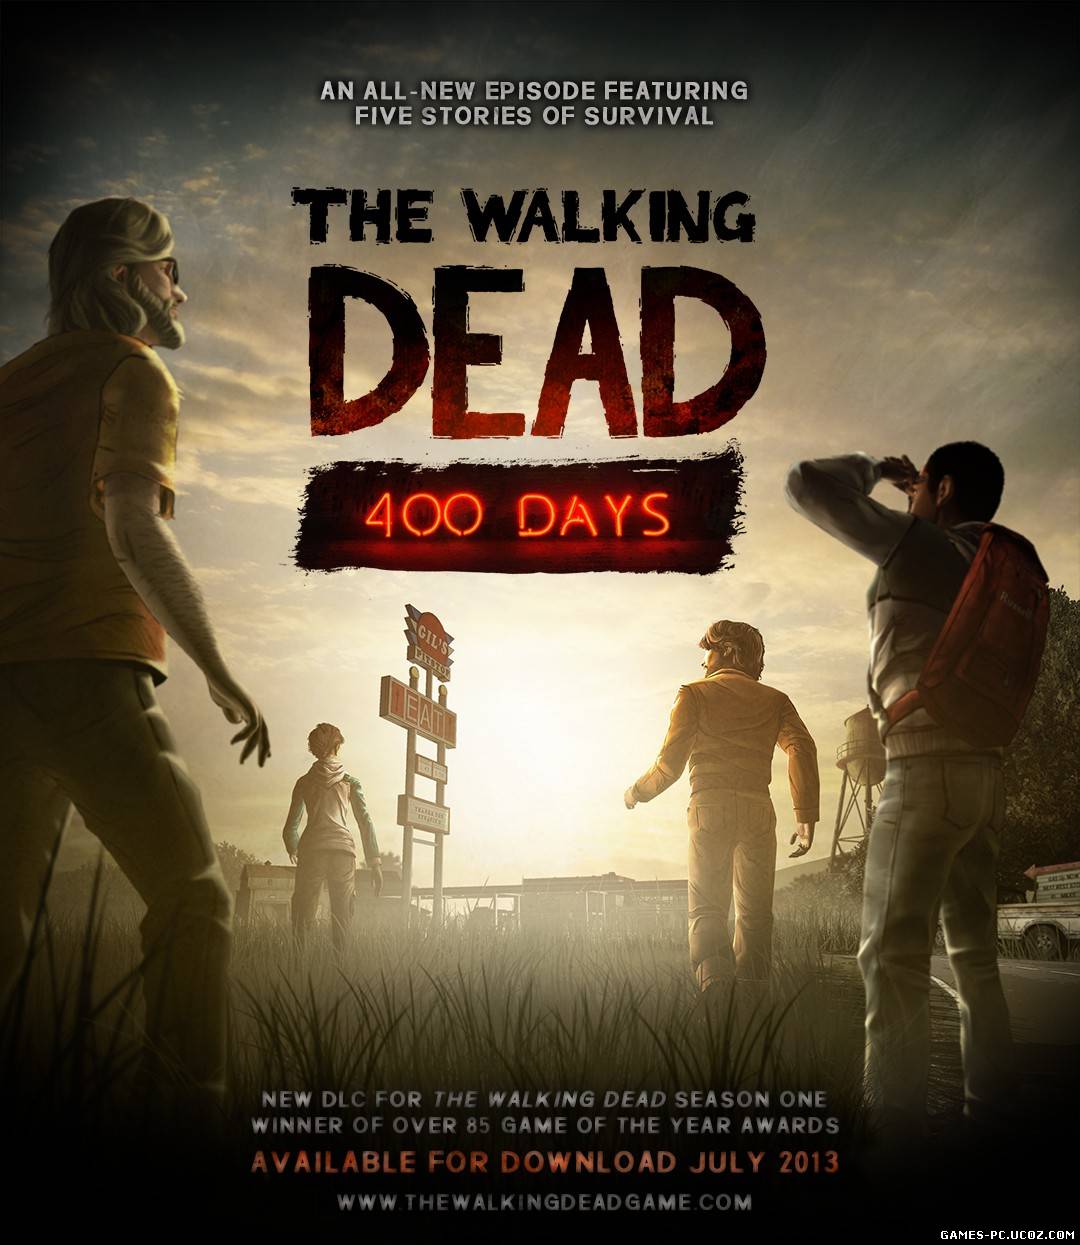 The Walking Dead / Ходячие Мертвецы - 400 Days (2013) [ENG]